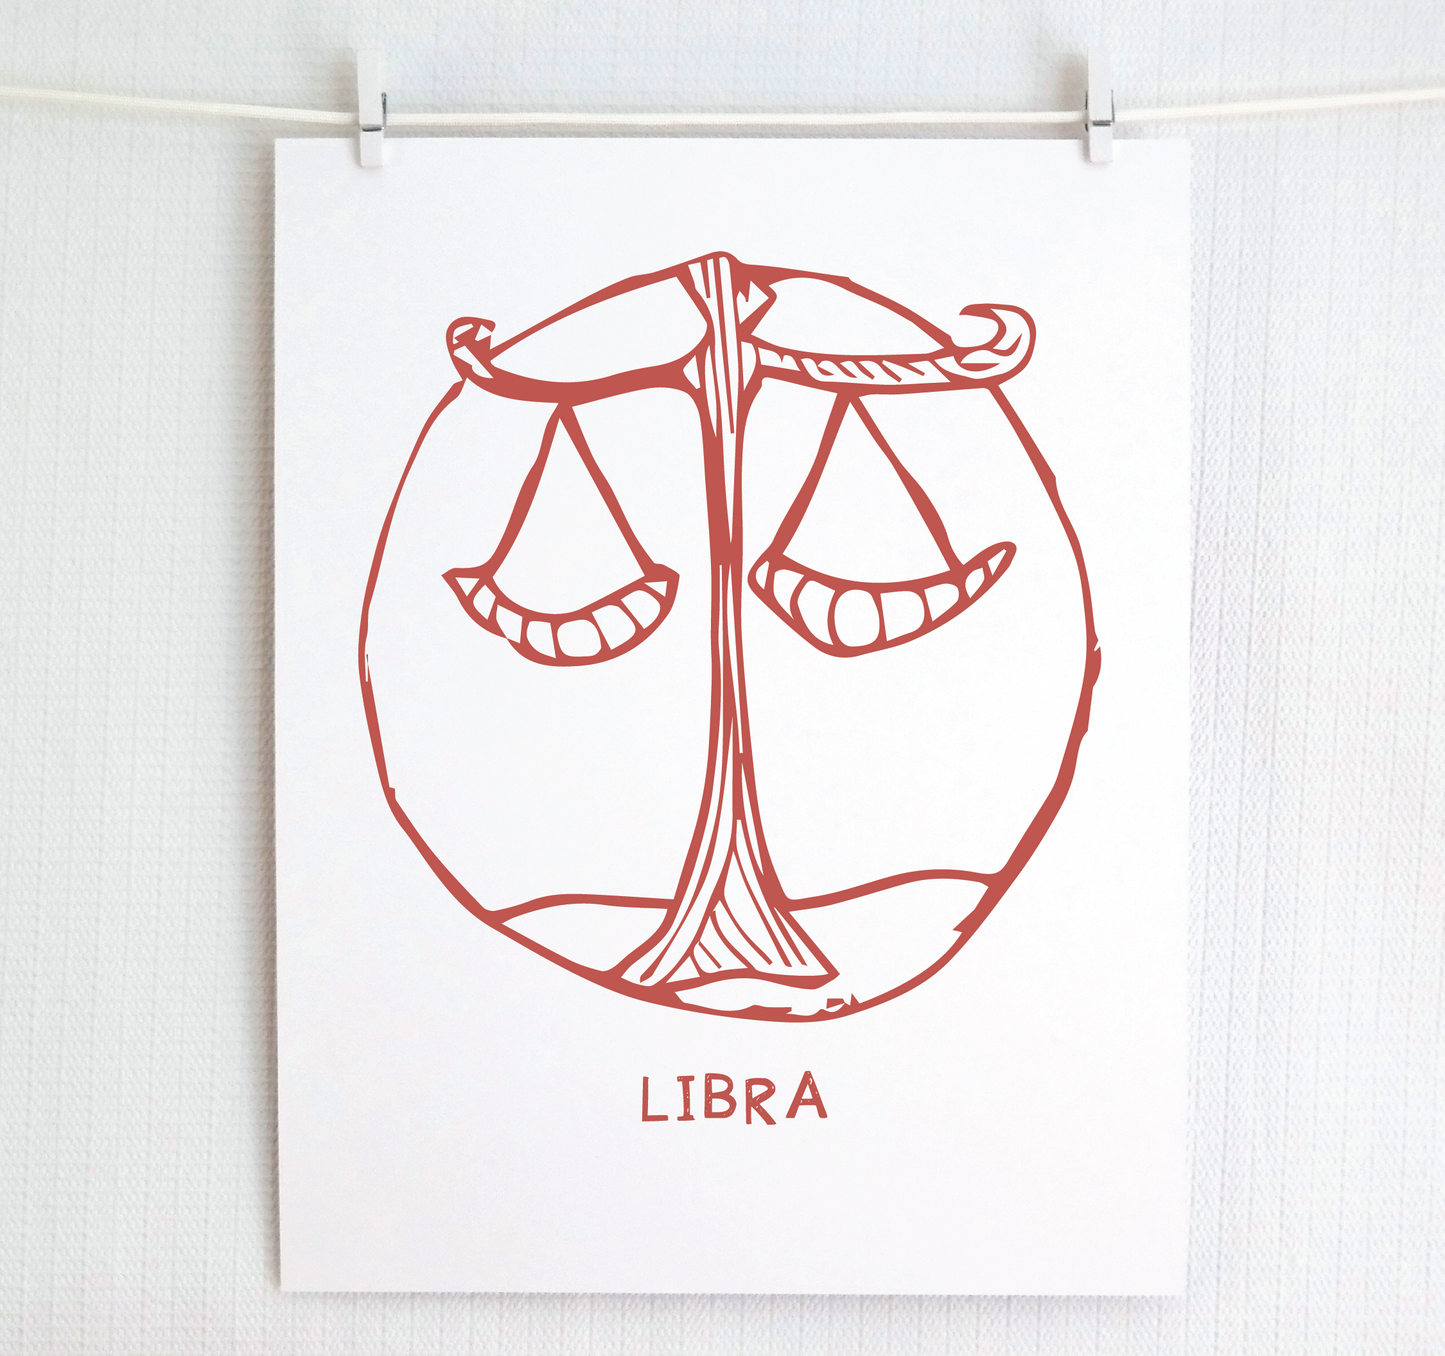 Signs of the Zodiac: LIBRA